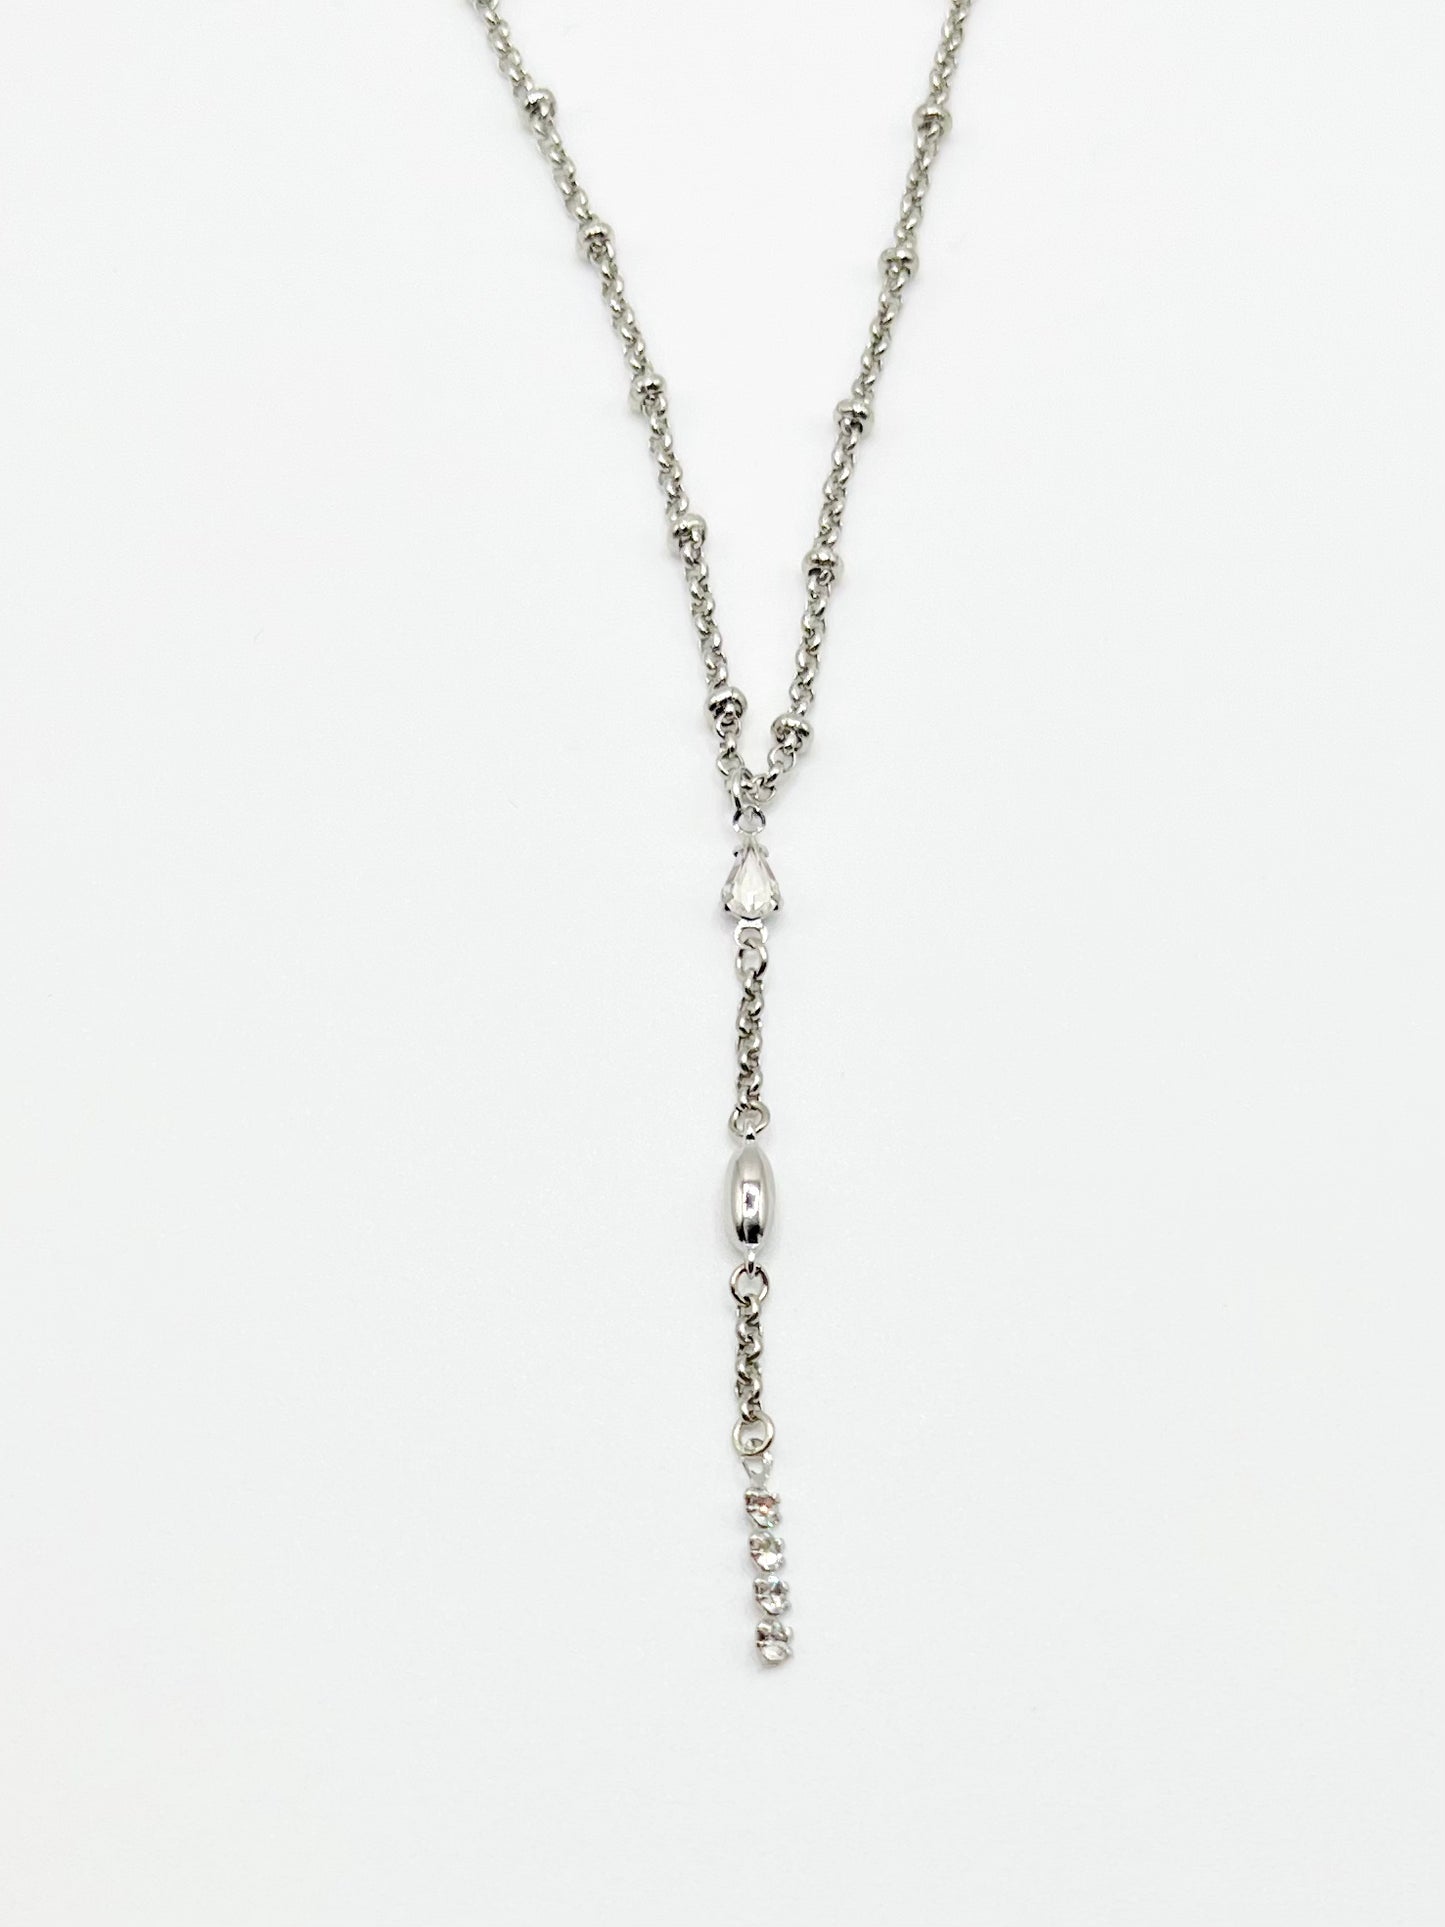 NW bijou motif necklace - Silver